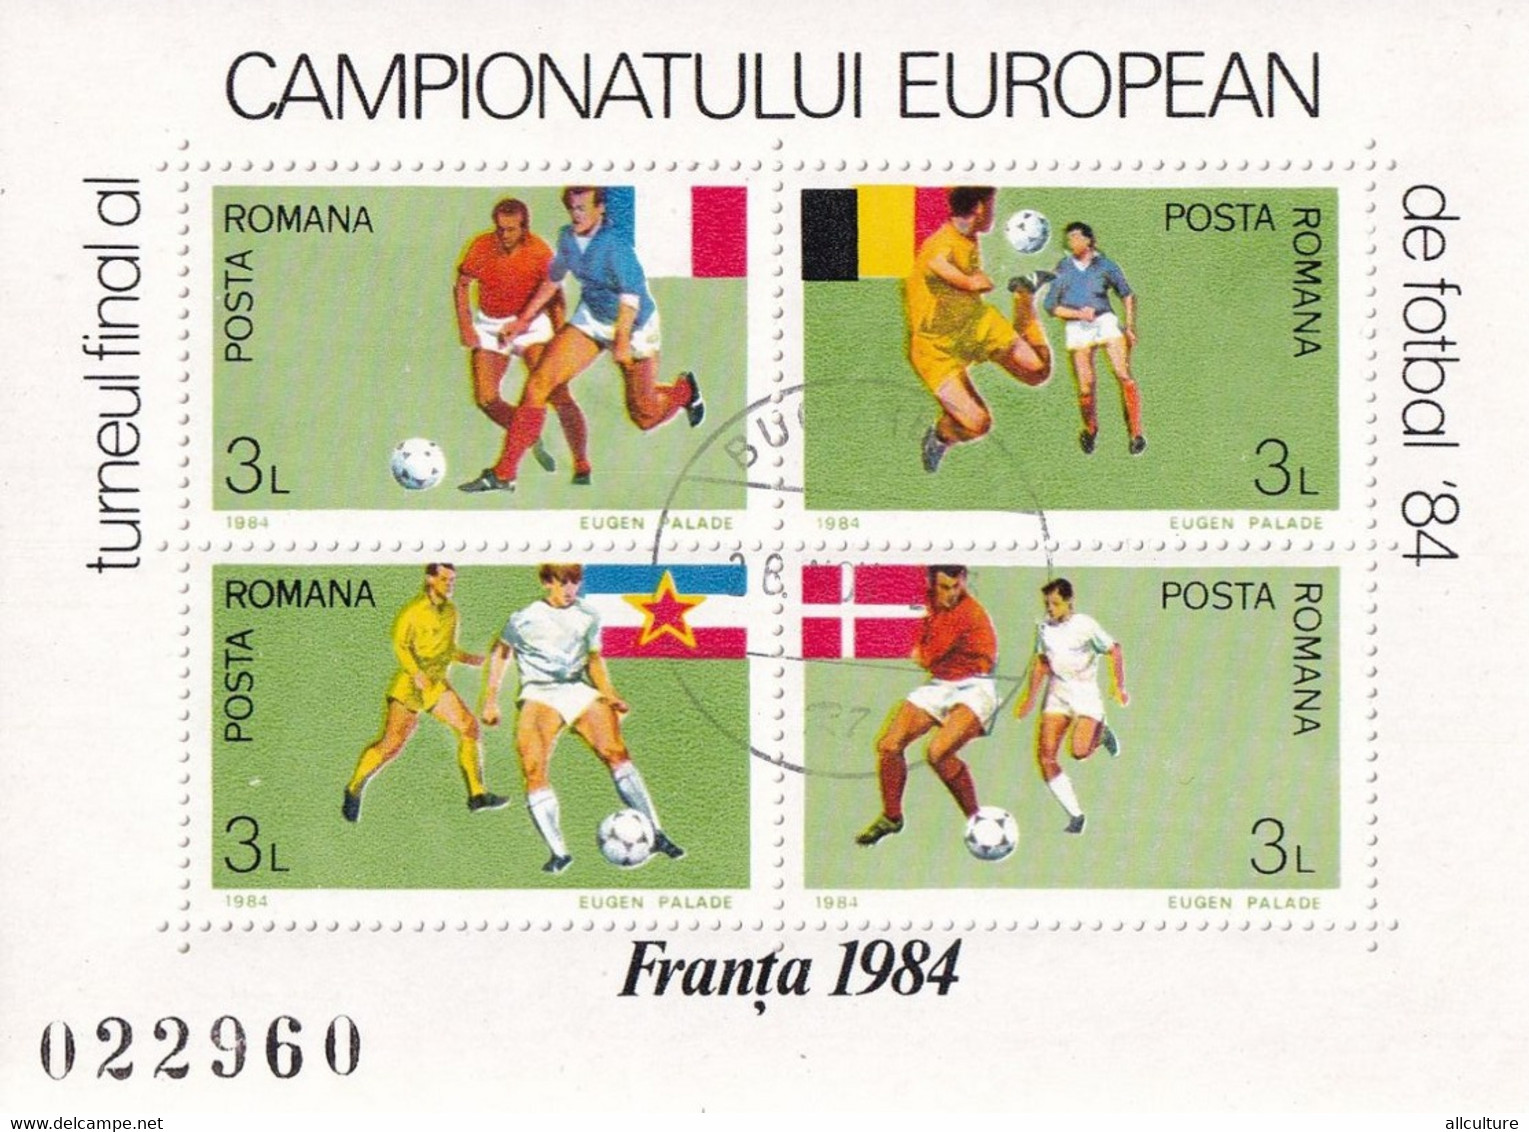 FRANTA 1984 EUROPEAN CHAMPIONSHIP  ROMANIA BLOCK - UEFA European Championship